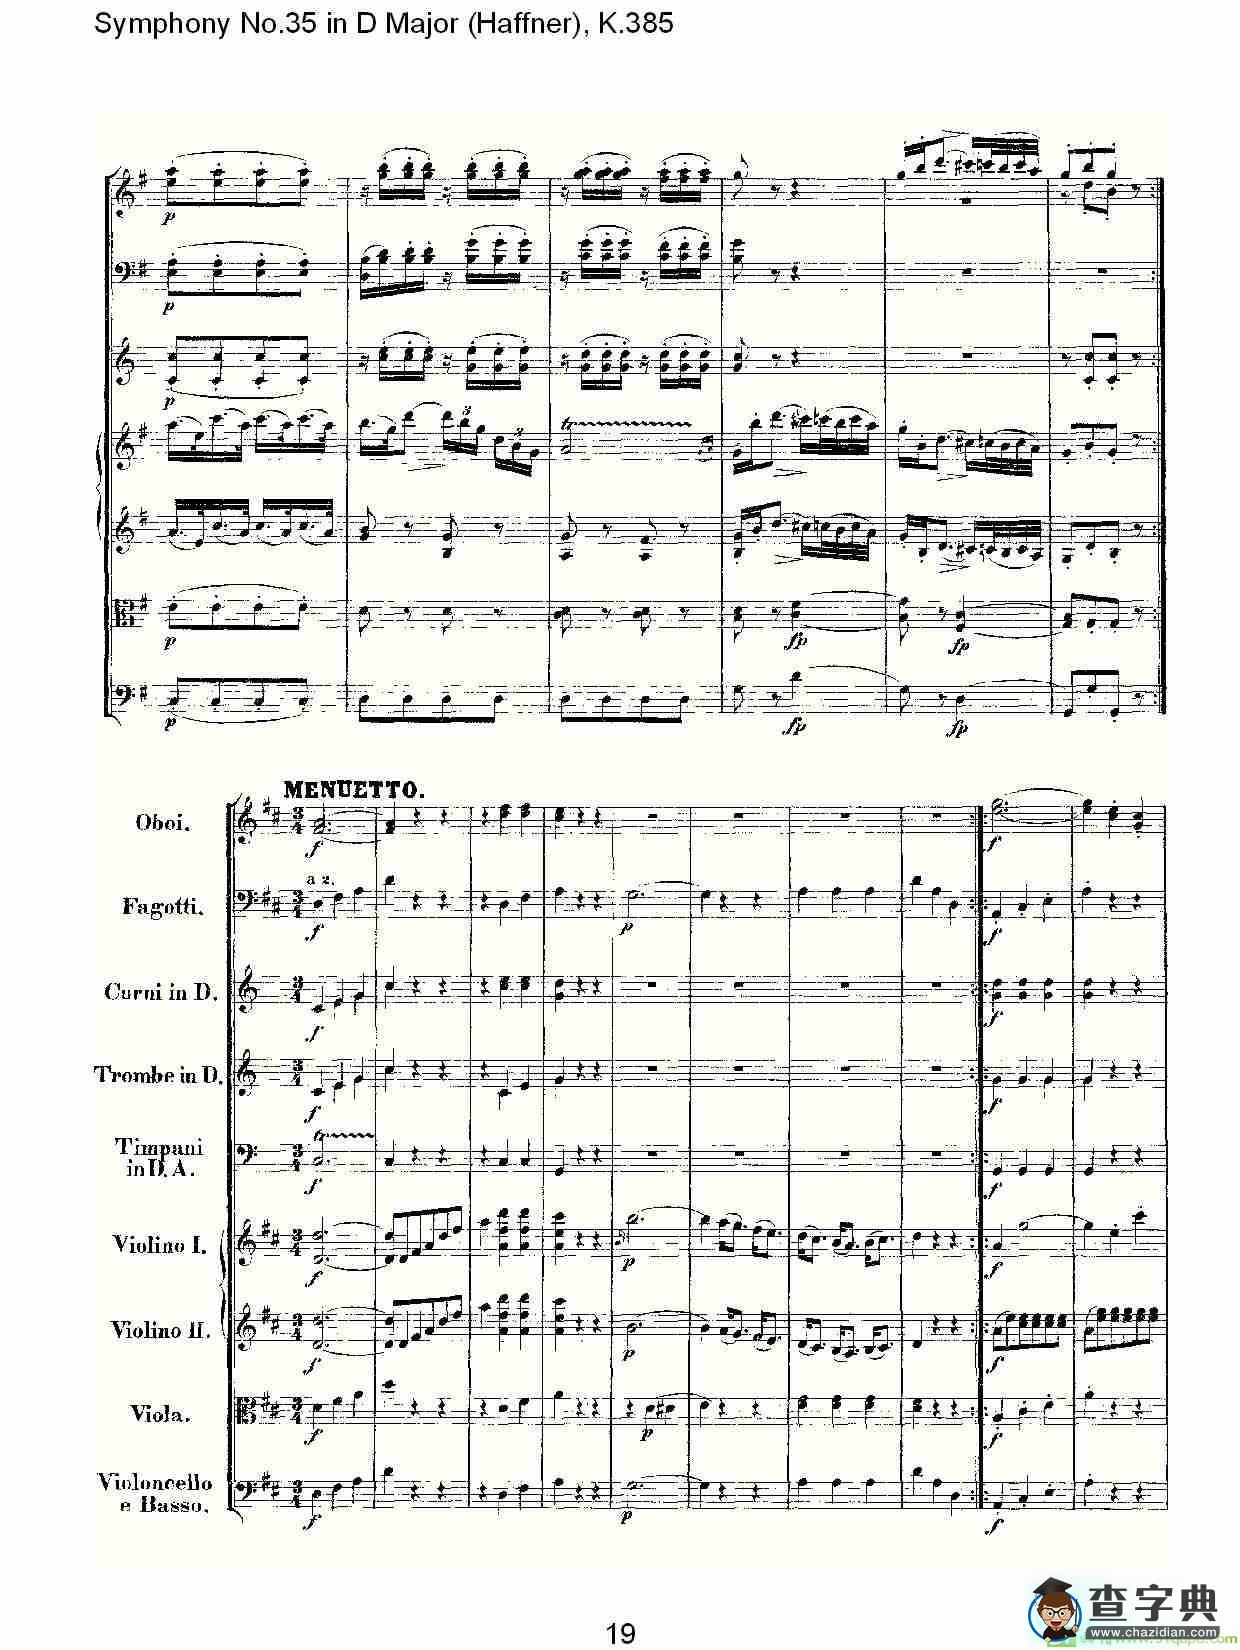 Symphony No.35 in D Major, K.385简谱